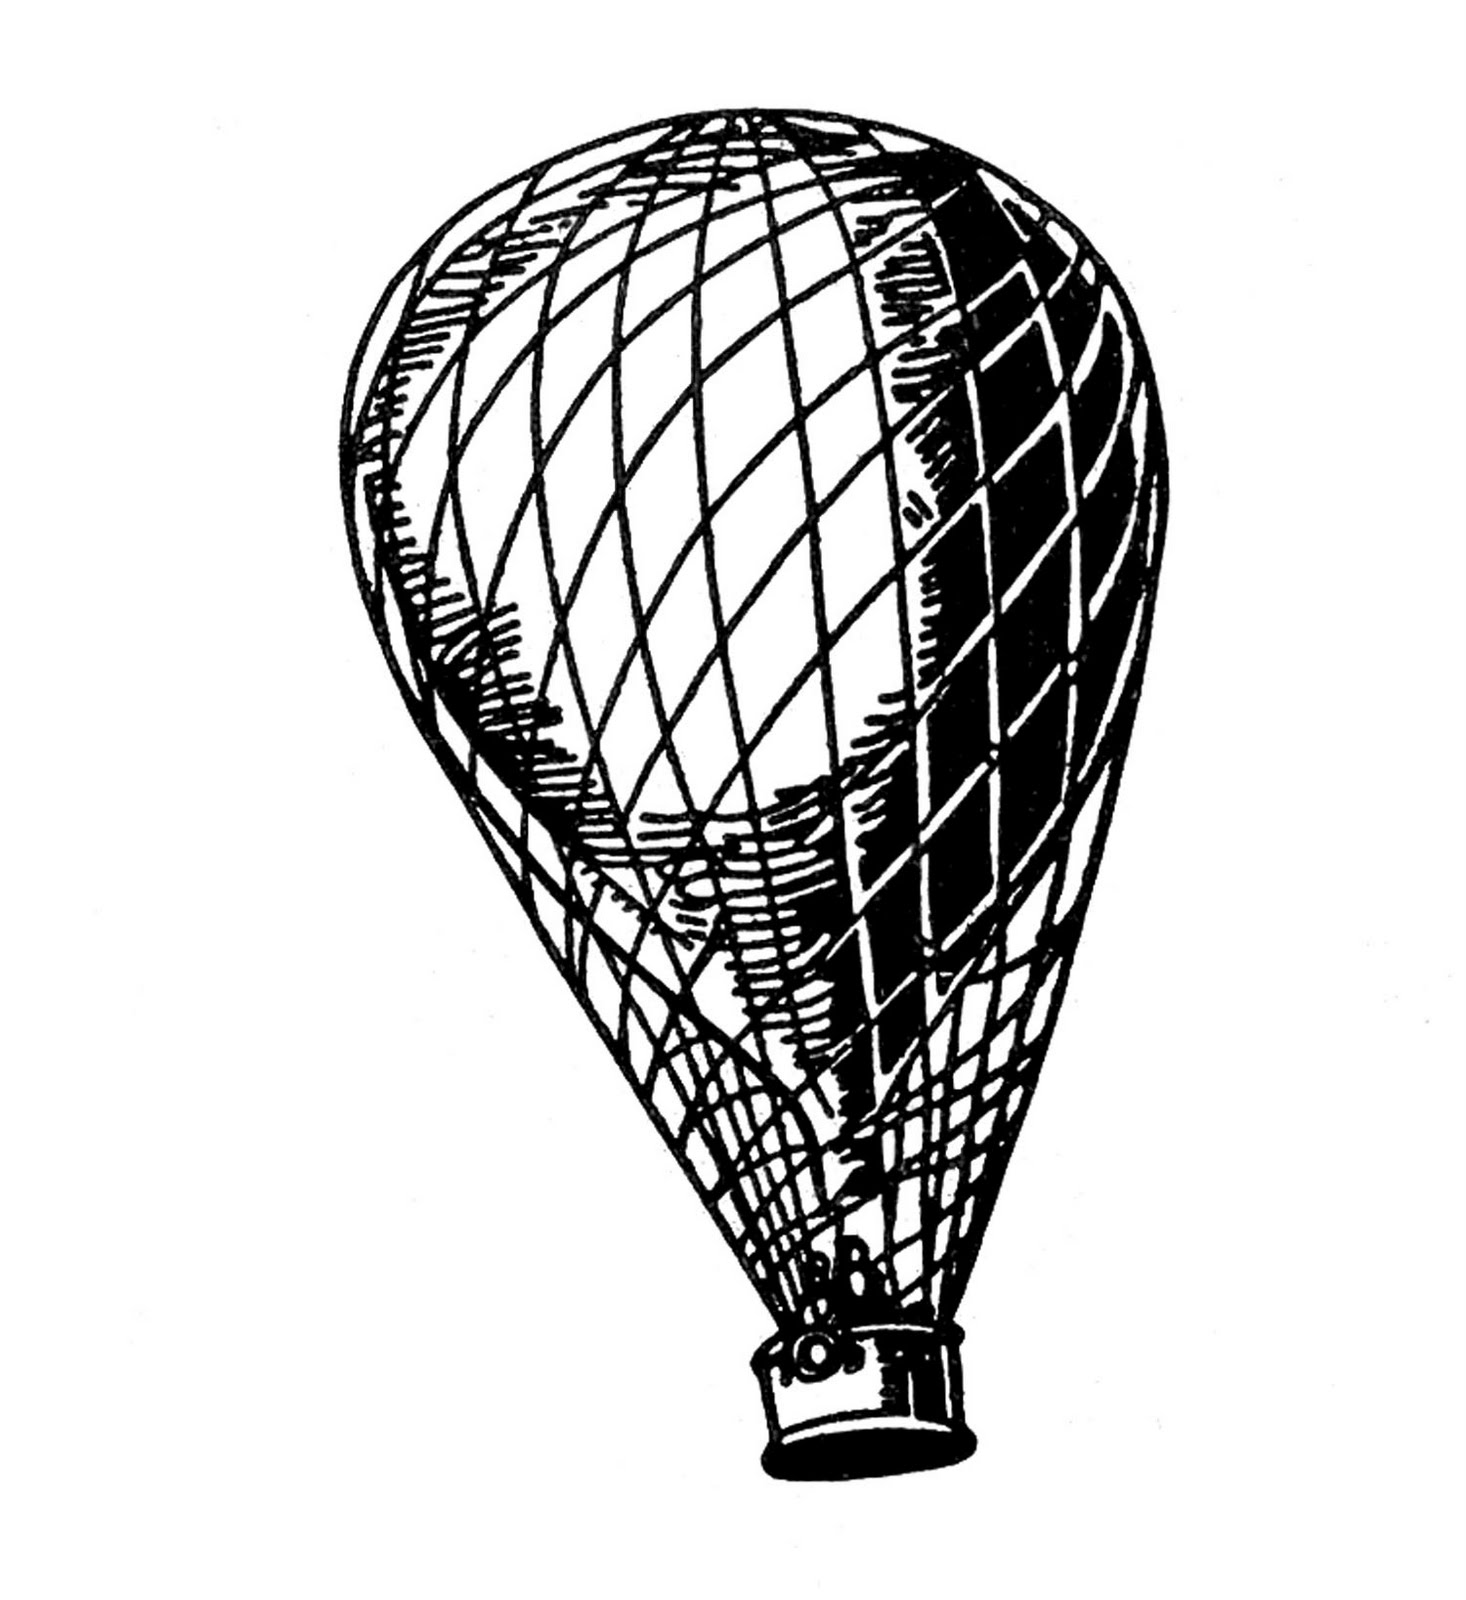 Vintage clip art transportation balloon airship aeroplane